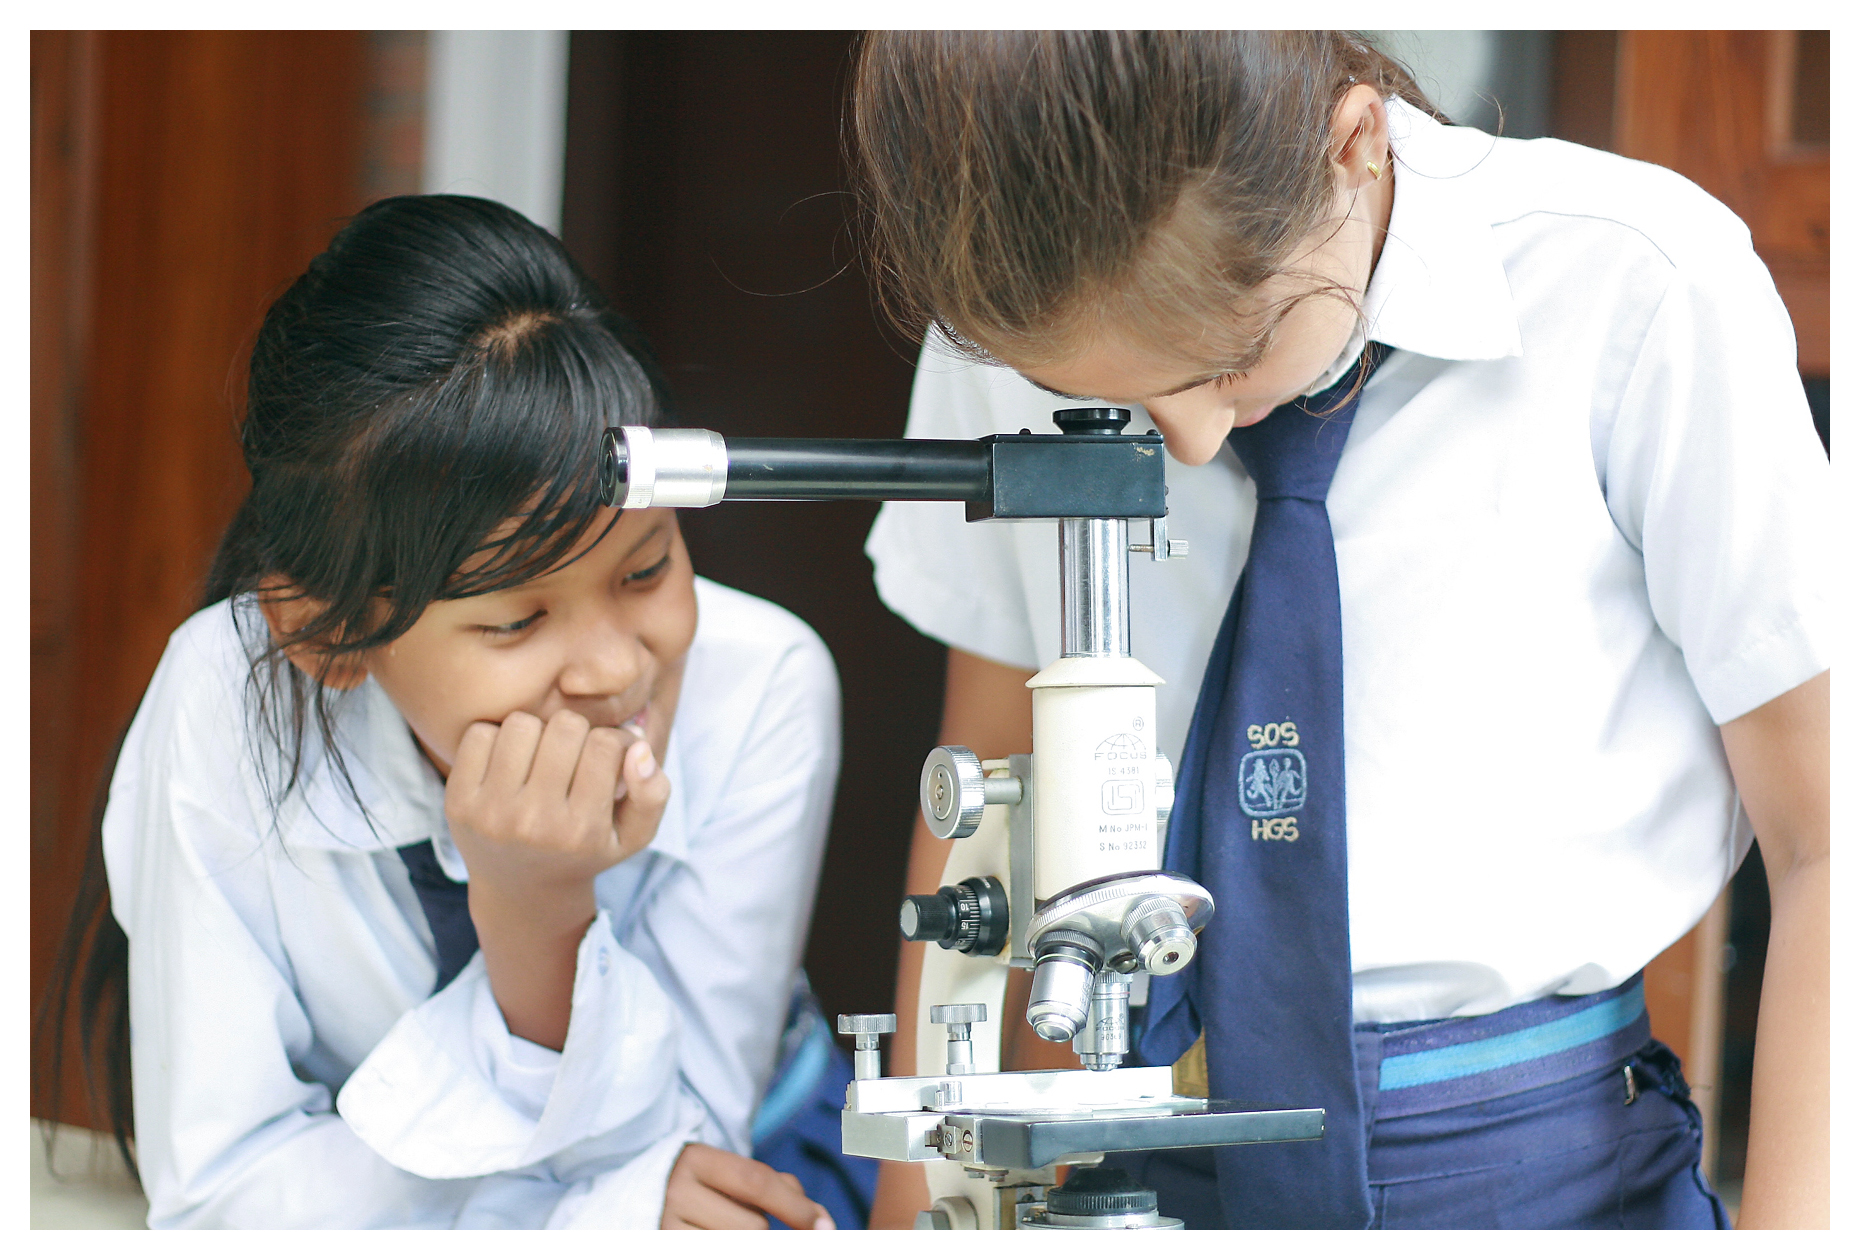 Studier i mikroskopet. SOS-skole i Nepal. 